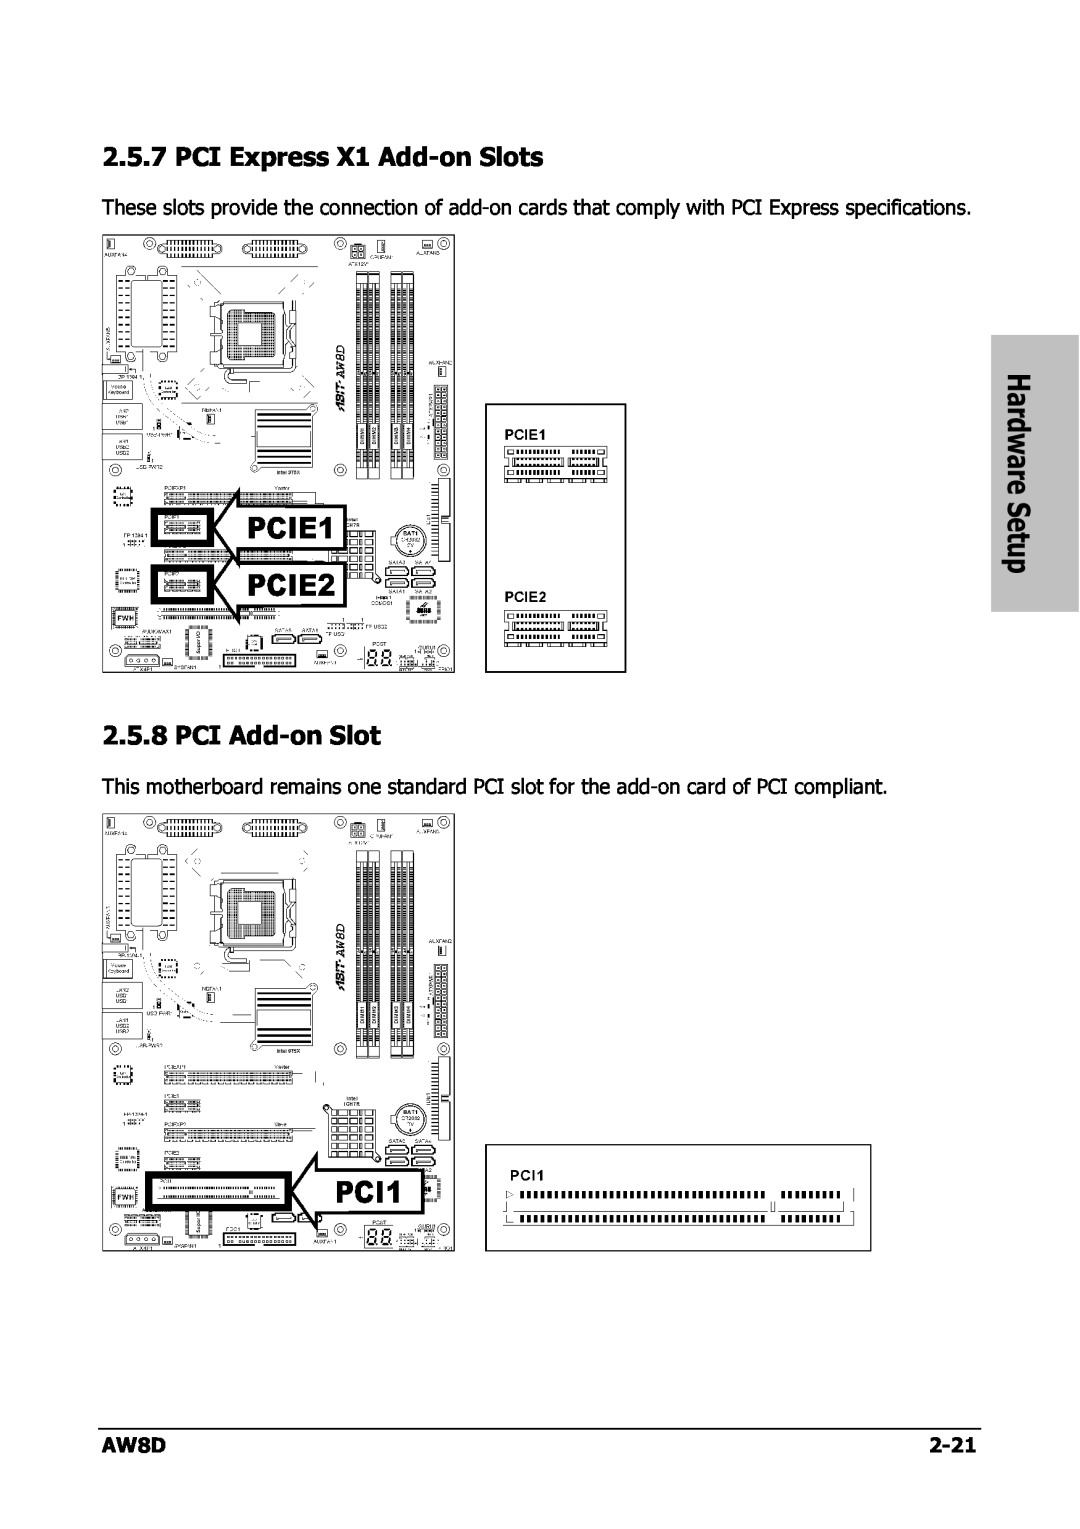 Intel AW8D user manual PCI Express X1 Add-on Slots, Hardware Setup 2.5.8 PCI Add-on Slot, 2-21 